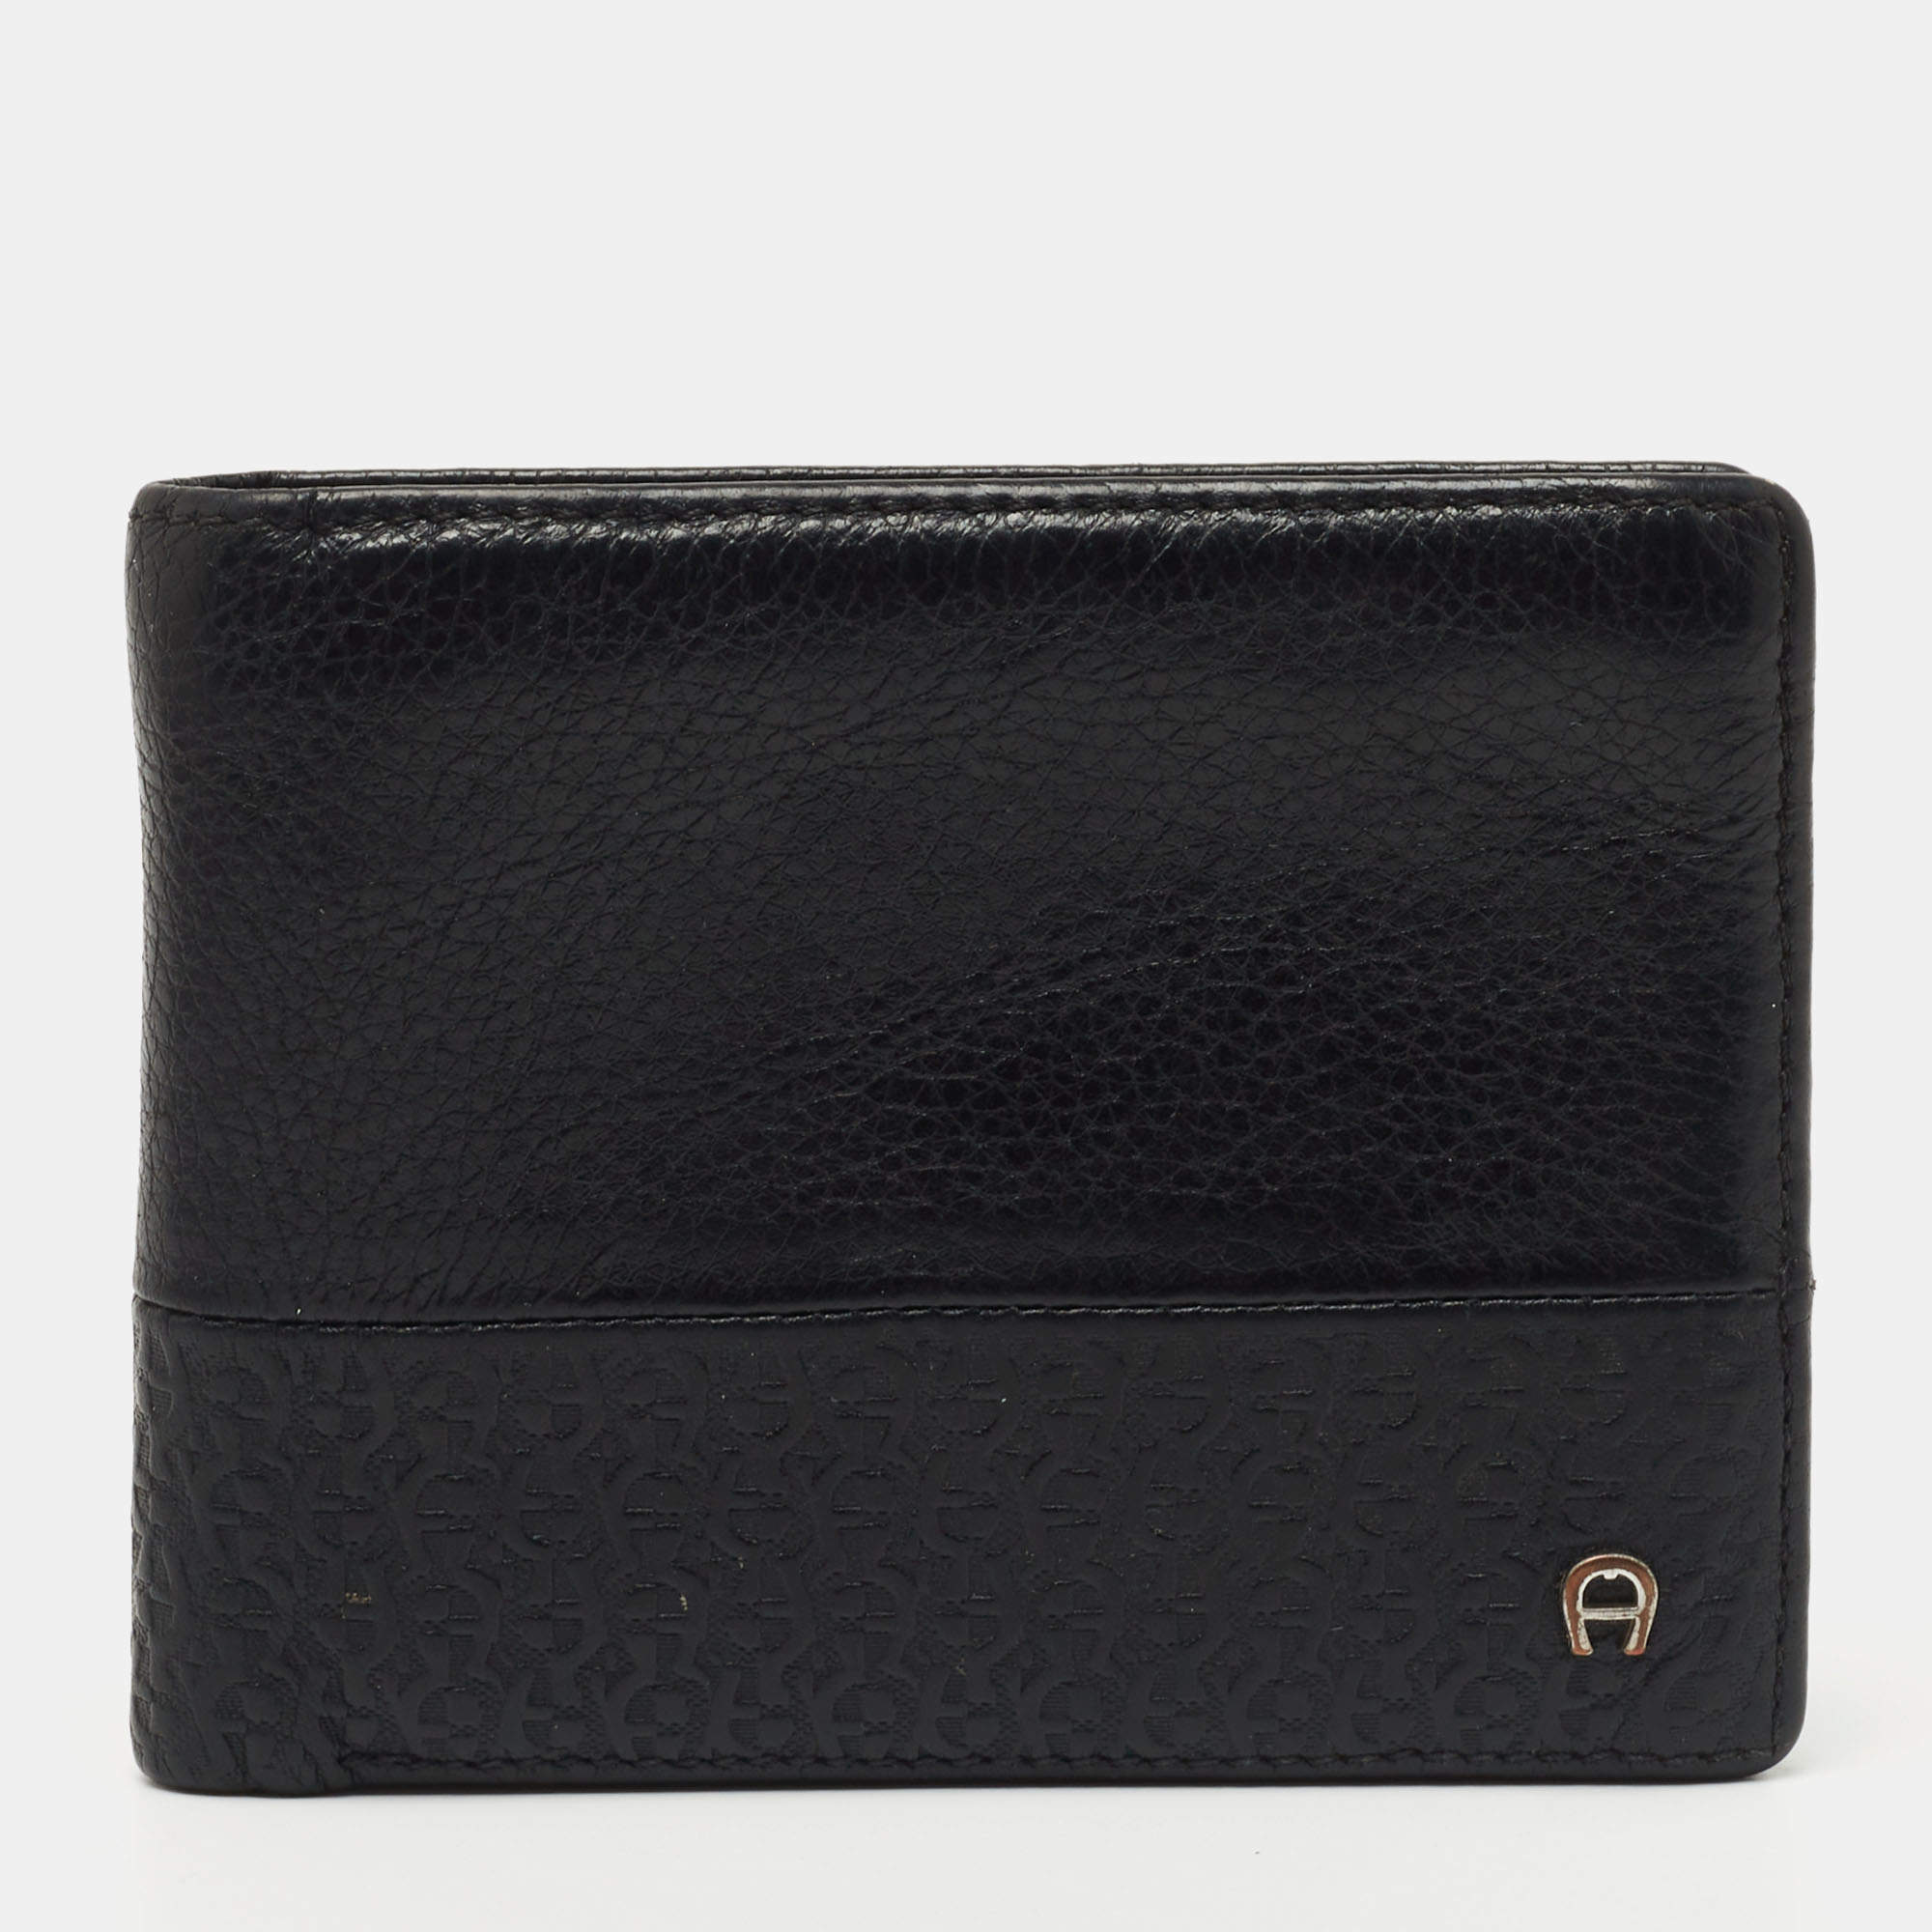 Aigner Black Leather Bifold Wallet